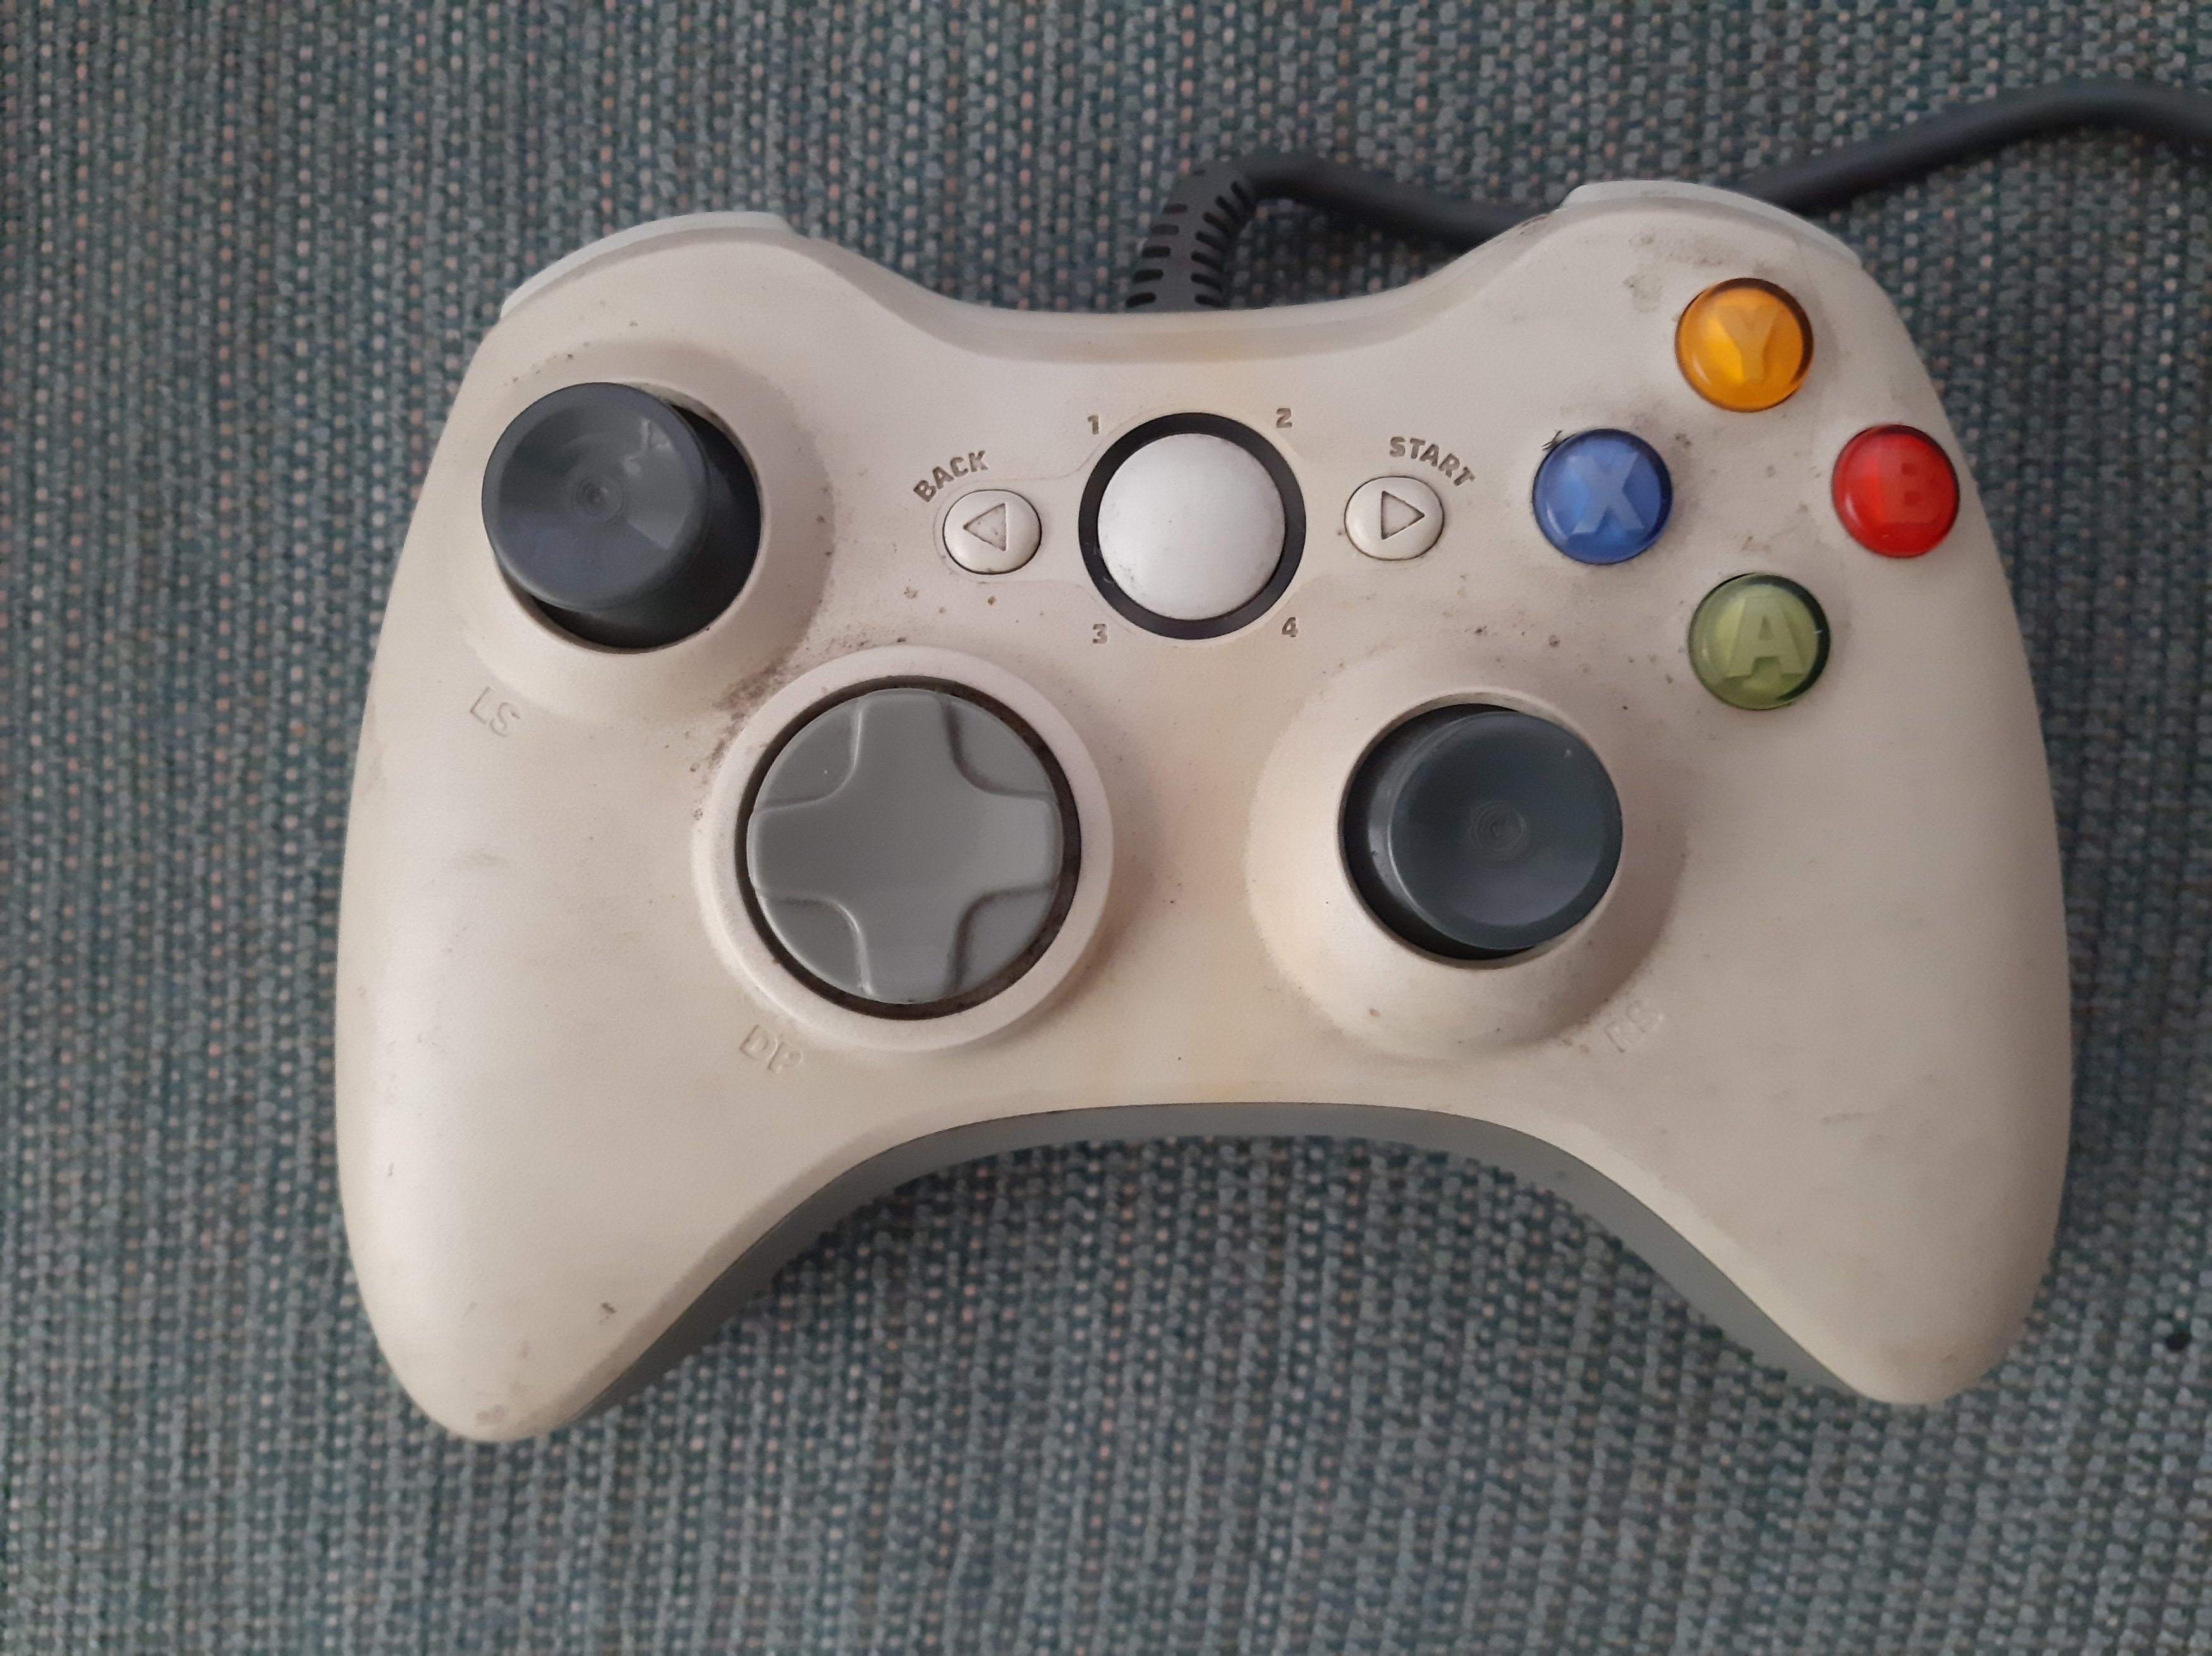 Xbox 360 Prototype Controller “Krypton” | GBAtemp.net - The Independent  Video Game Community